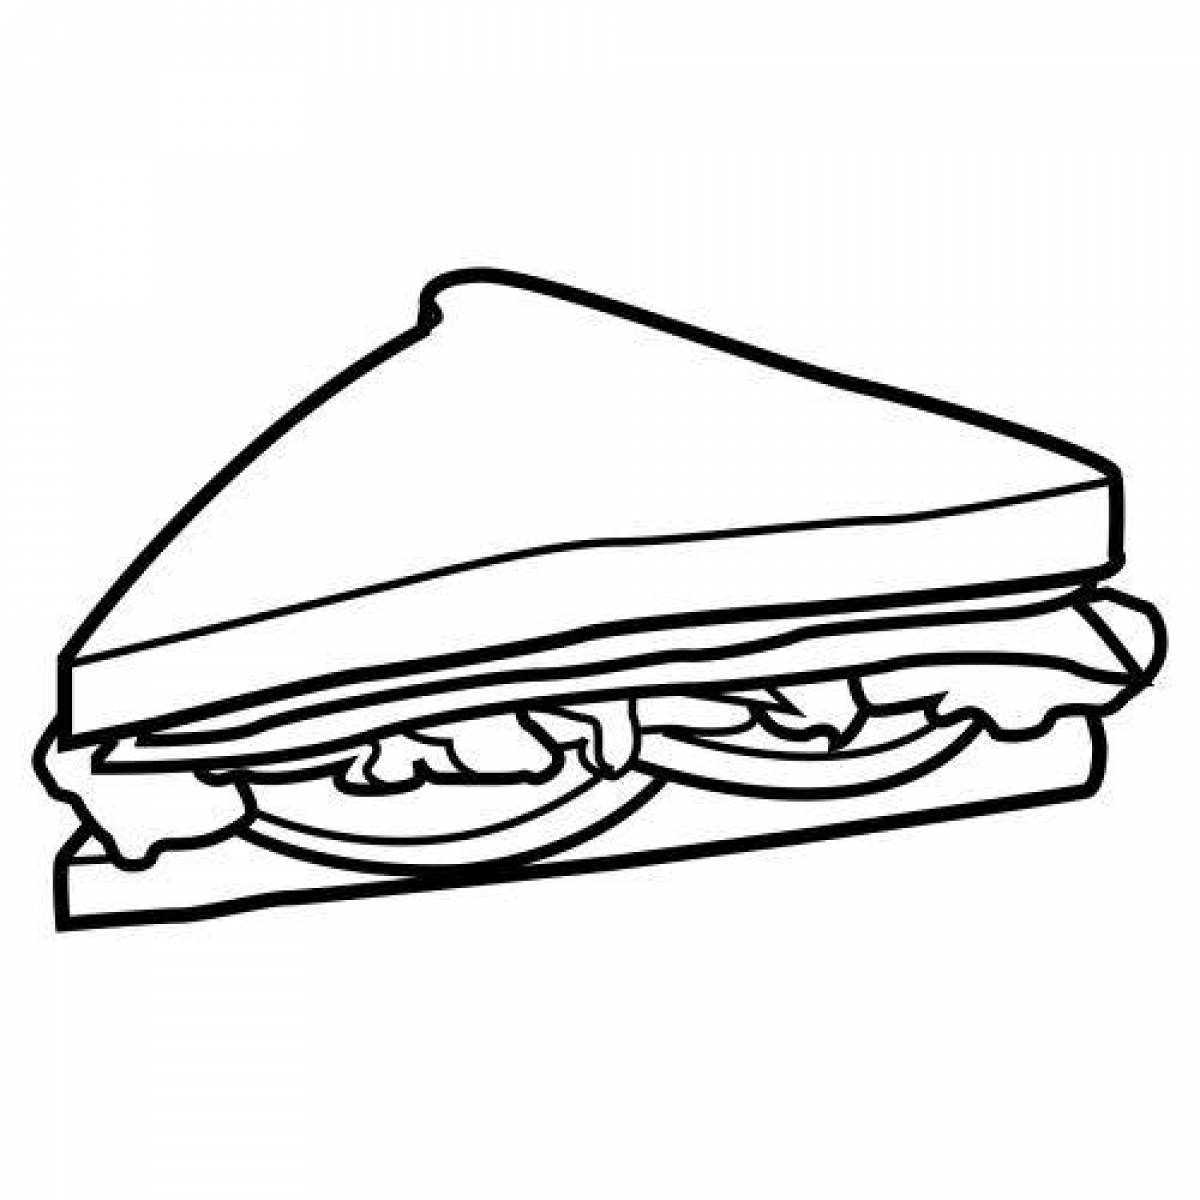 Delicious sandwich coloring page